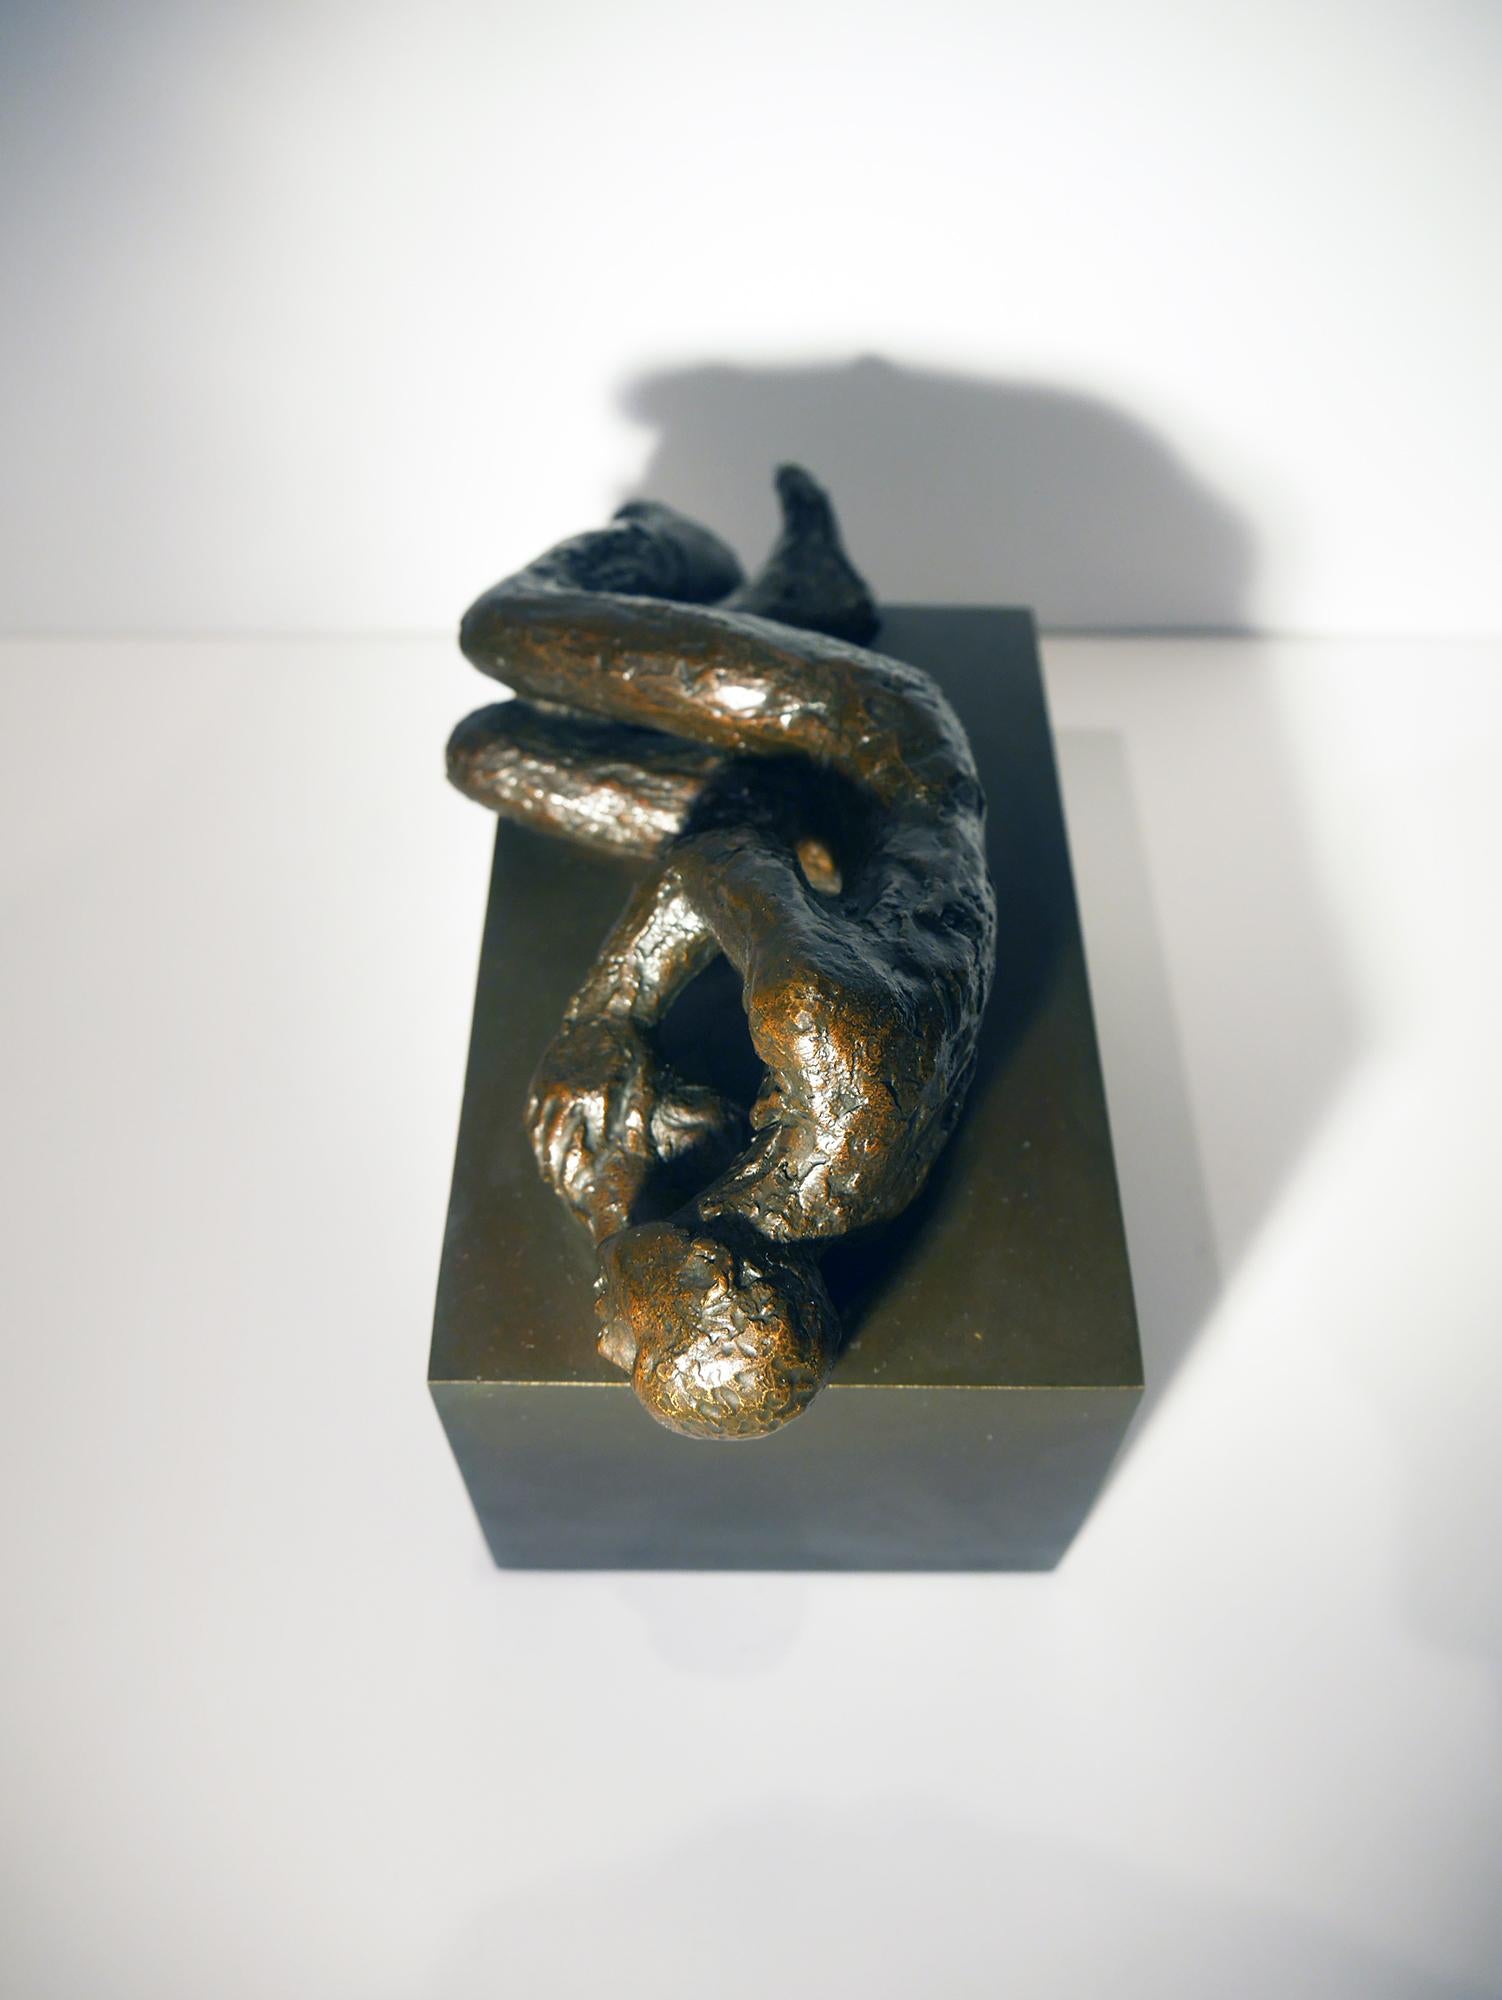 Le dormeur, figurative bronze sculpture by Maguy Banq minimalist man sleeping For Sale 1